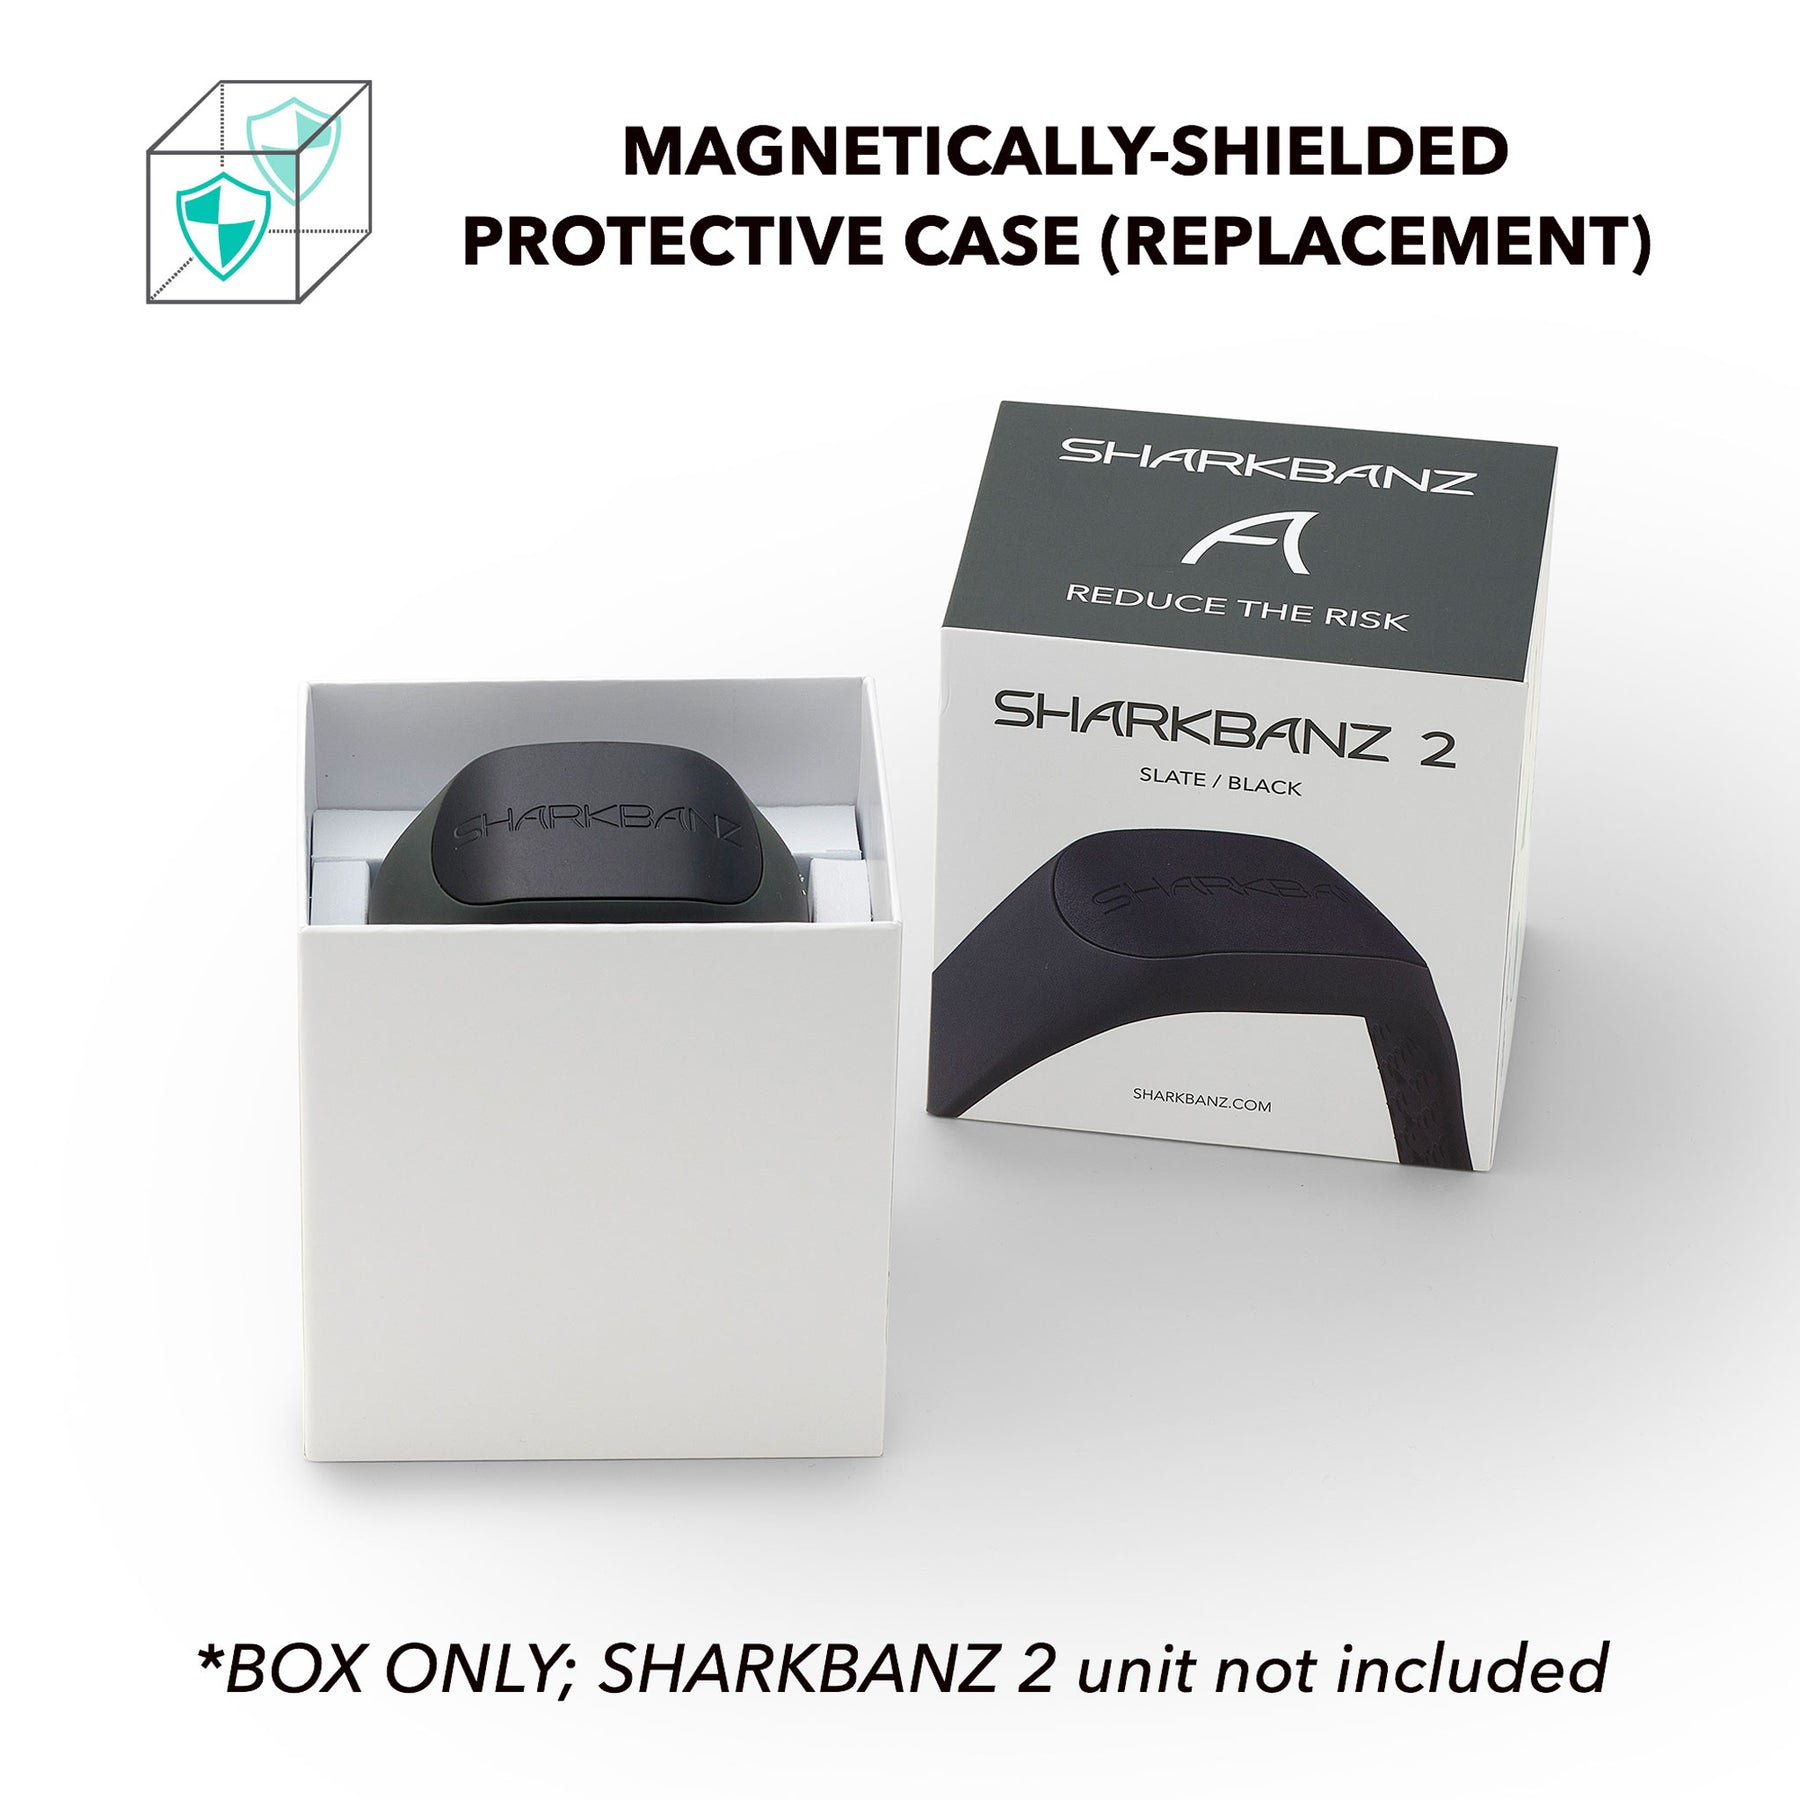 Sharkbanz - Product Care